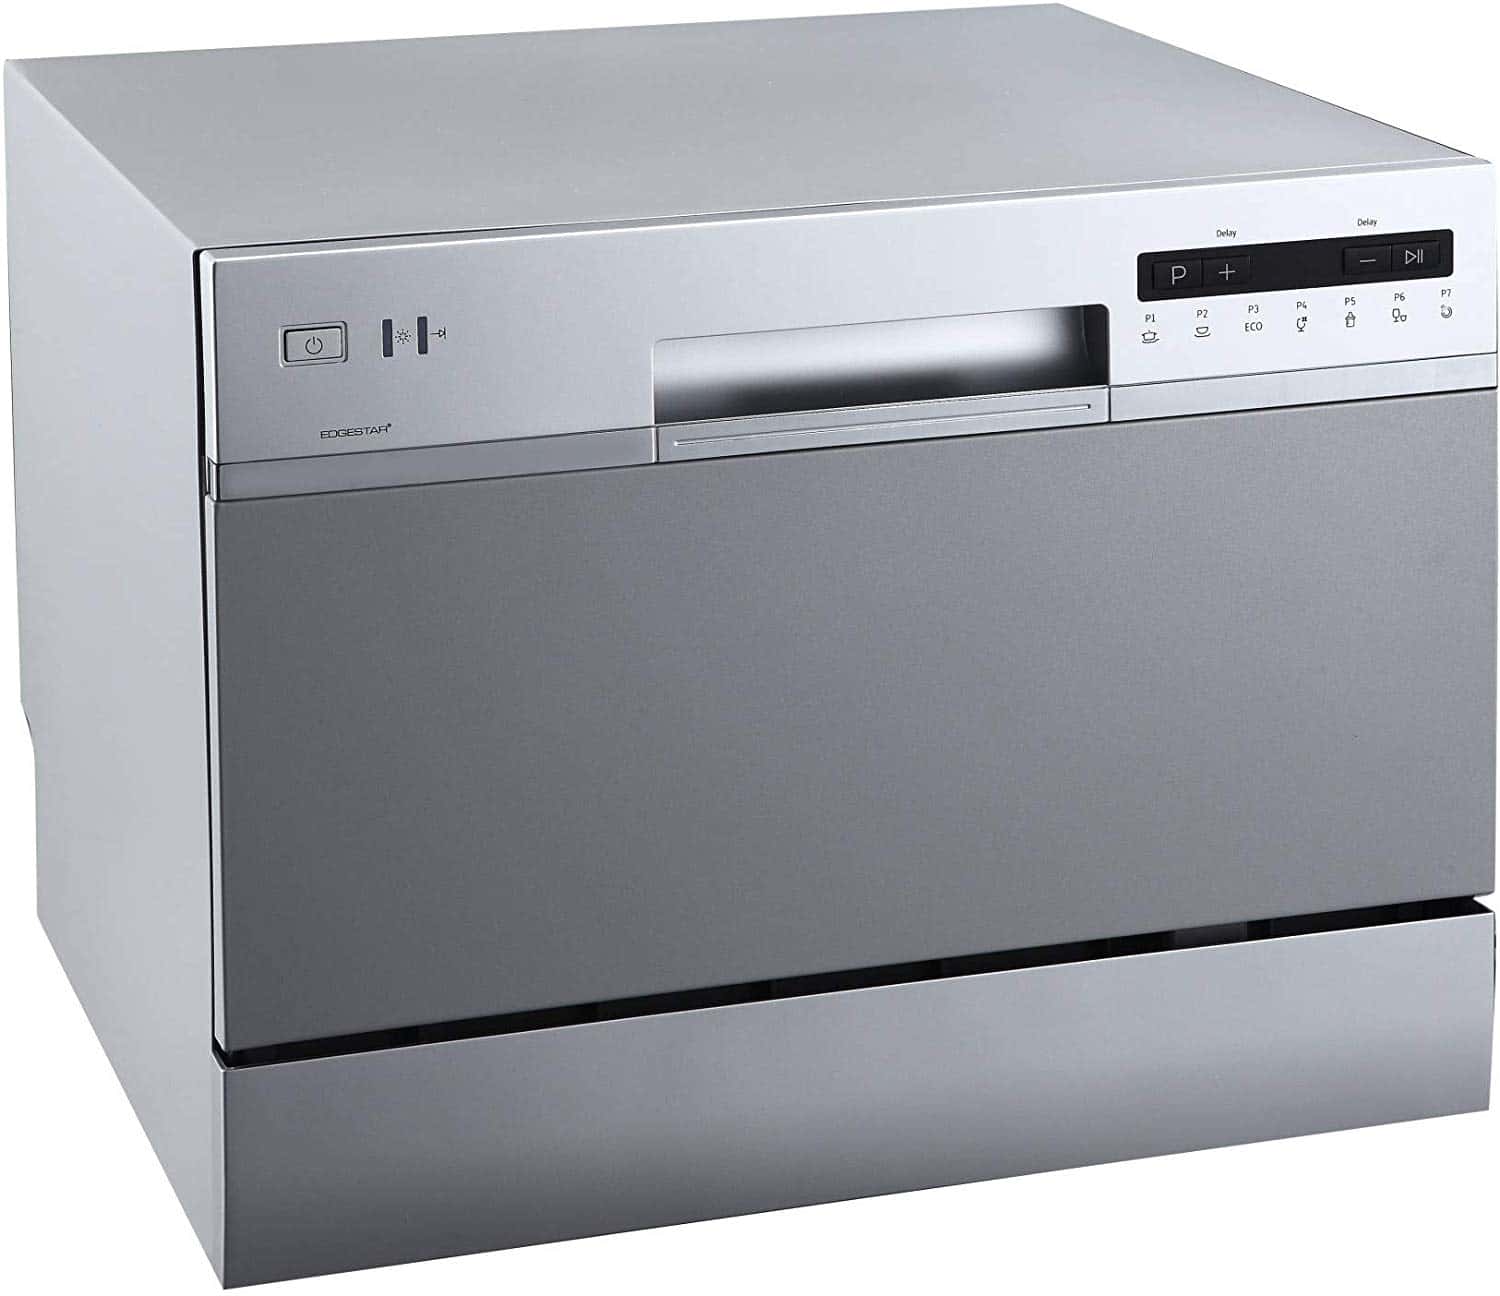 EdgeStar DWP62SV Dishwasher Review 